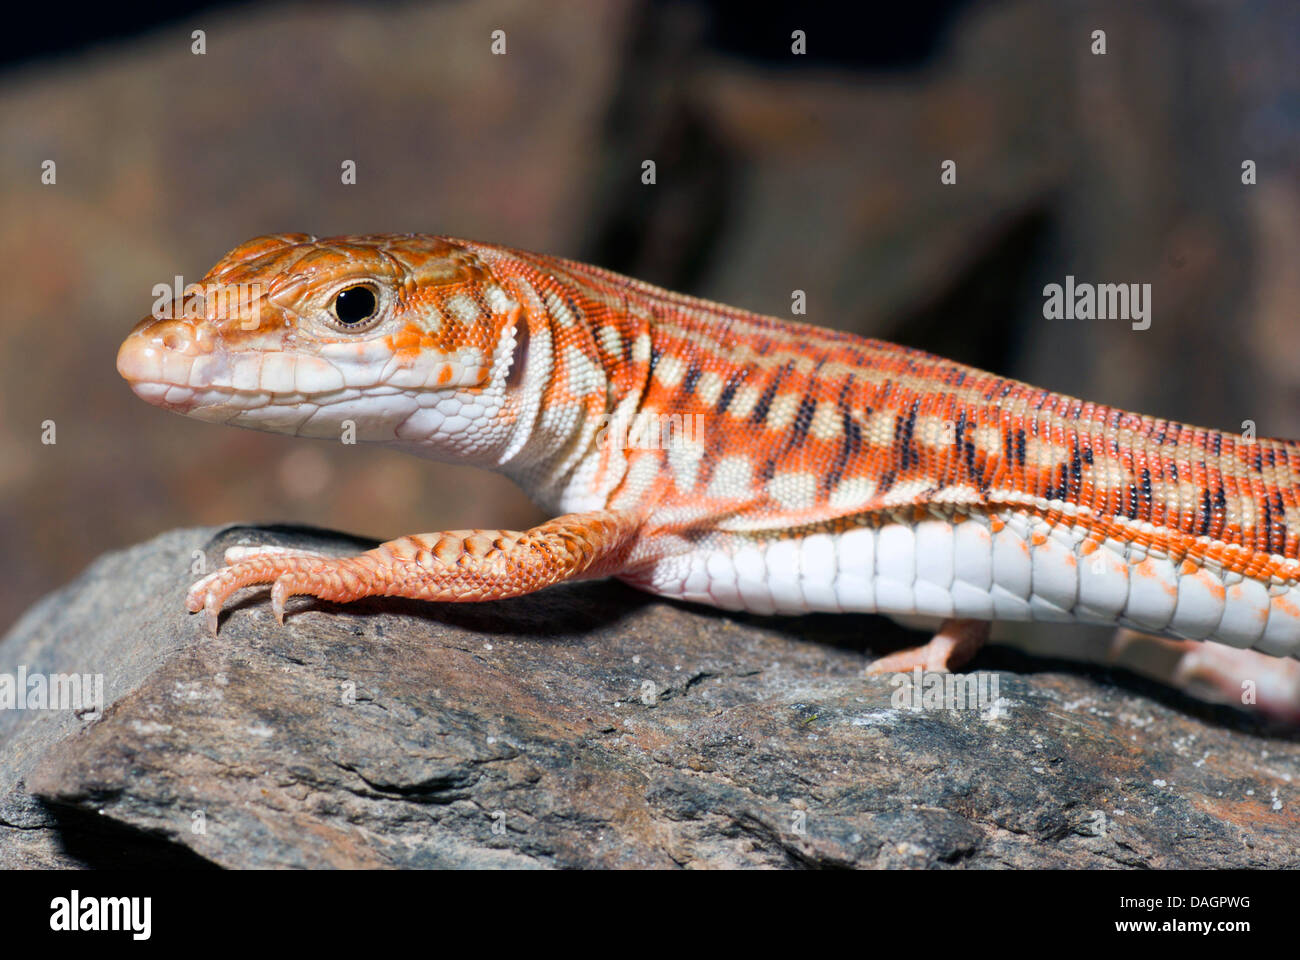 Painted Long Tailed Lizard (Latastia longicaudata), on a stone Stock Photo